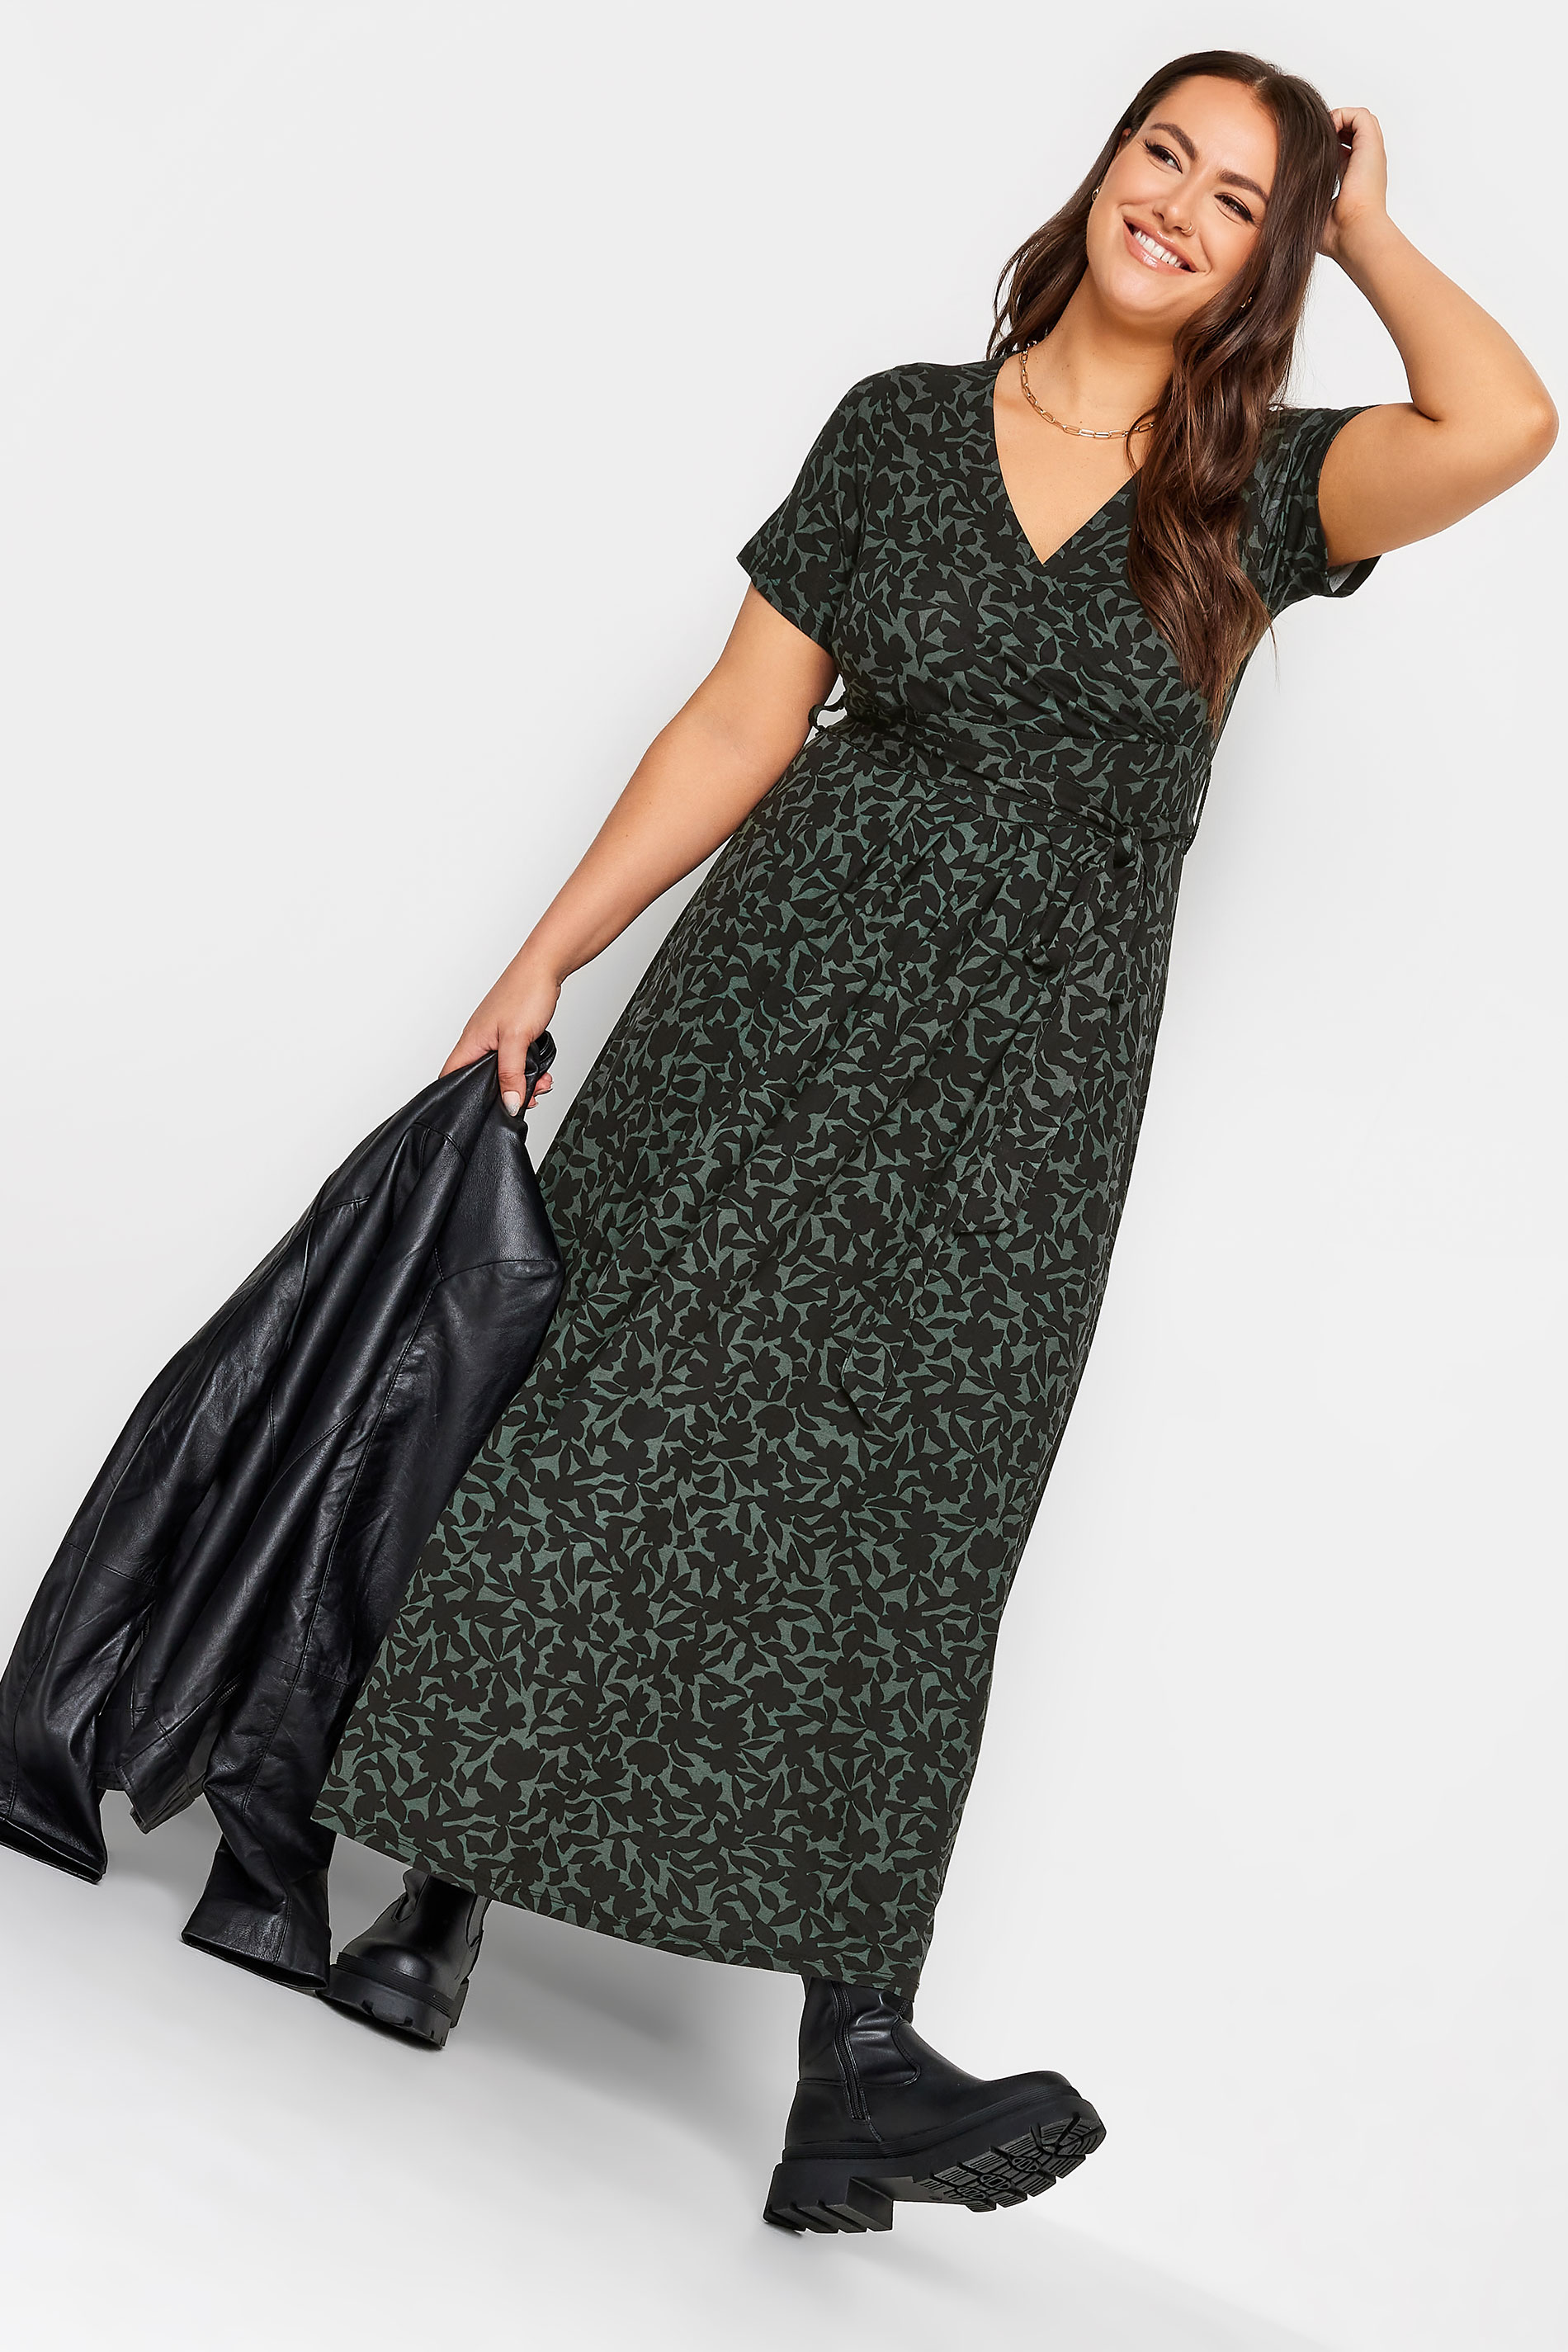 YOURS Plus Size Khaki Green Floral Print Wrap Maxi Dress | Yours Clothing 3